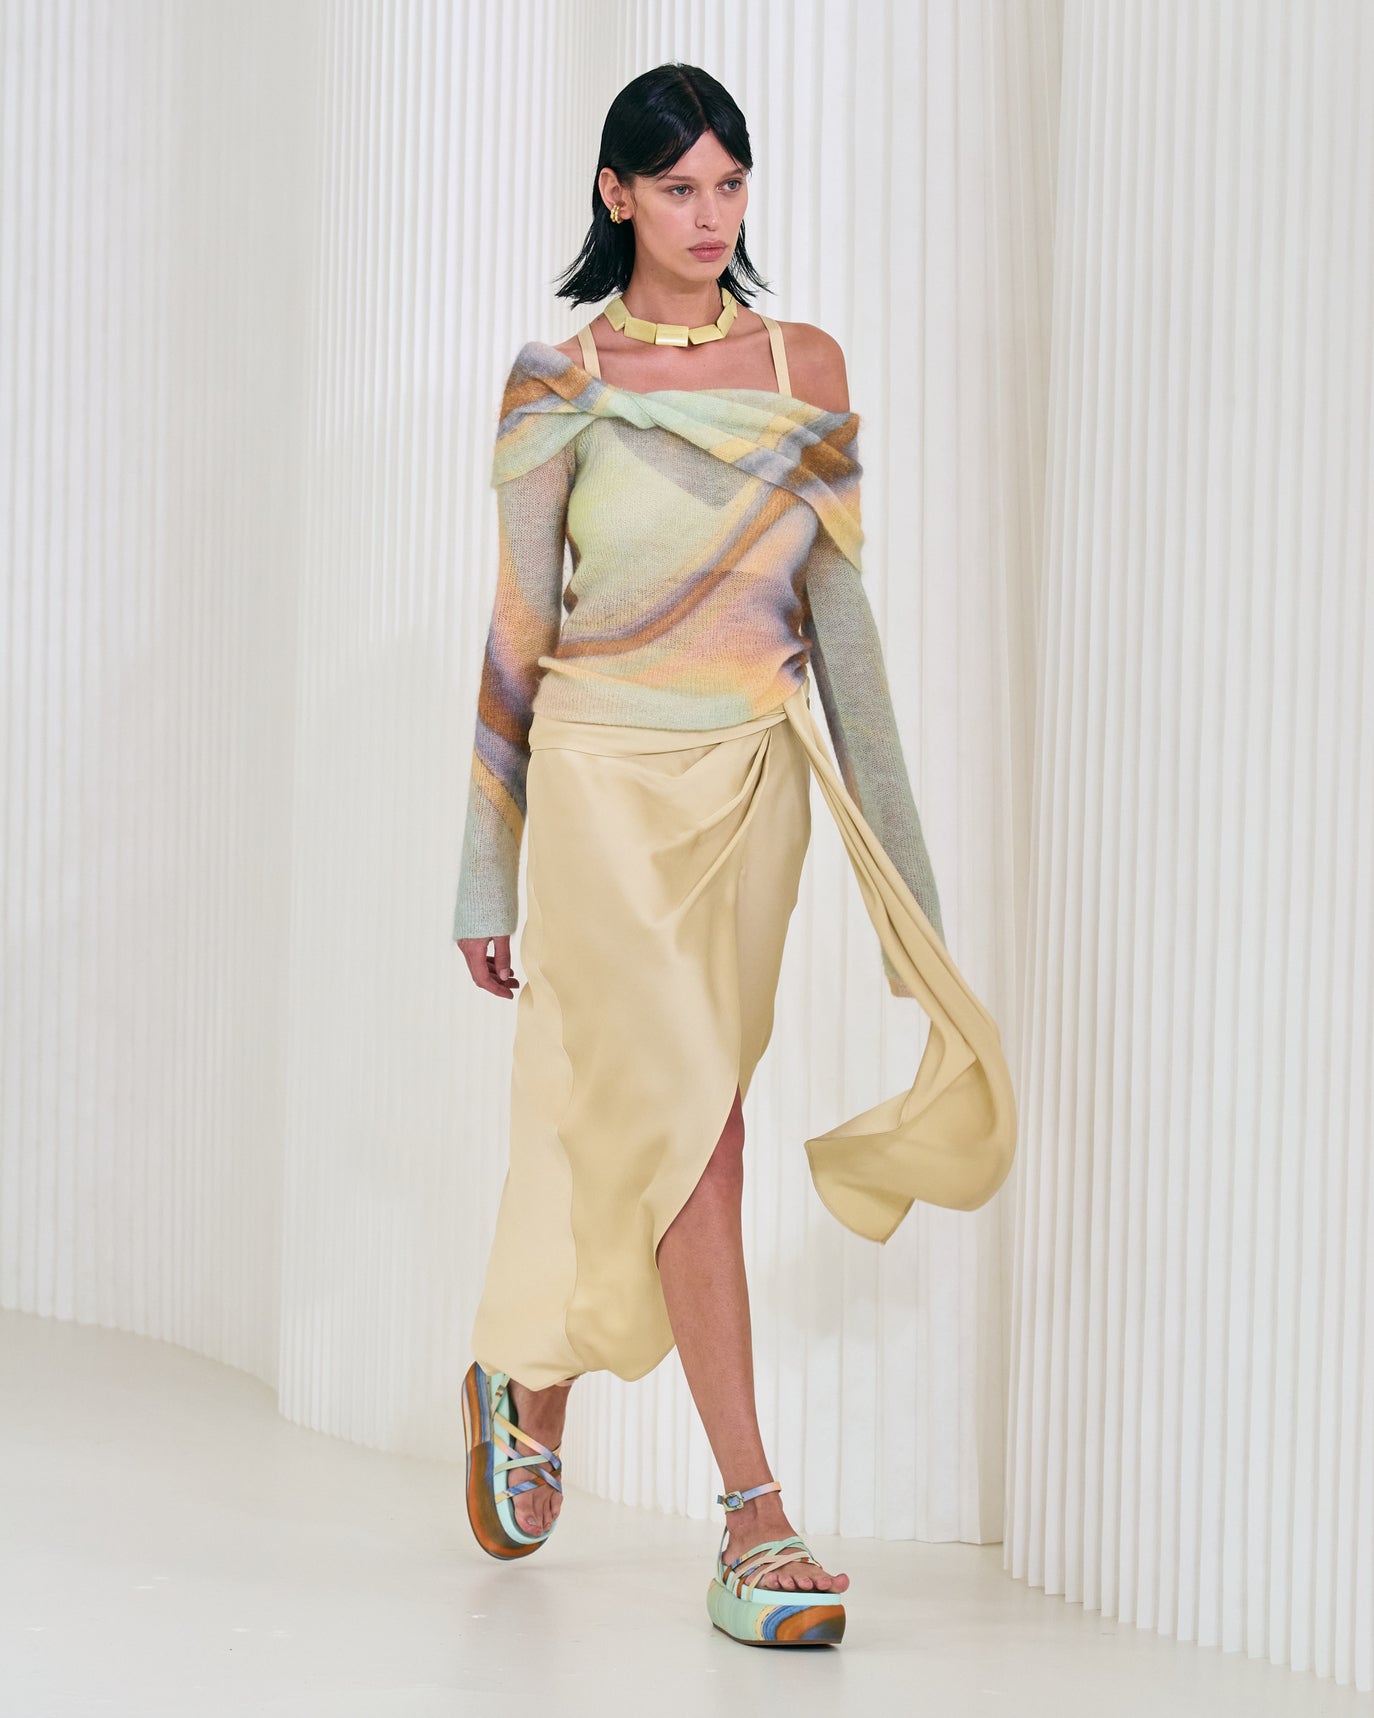 Jonathan Simkhai Ready To Wear Fashion Show Collection Spring Summer 2023,  Runway look #003 – New York Fashion Week. – NOWFASHION